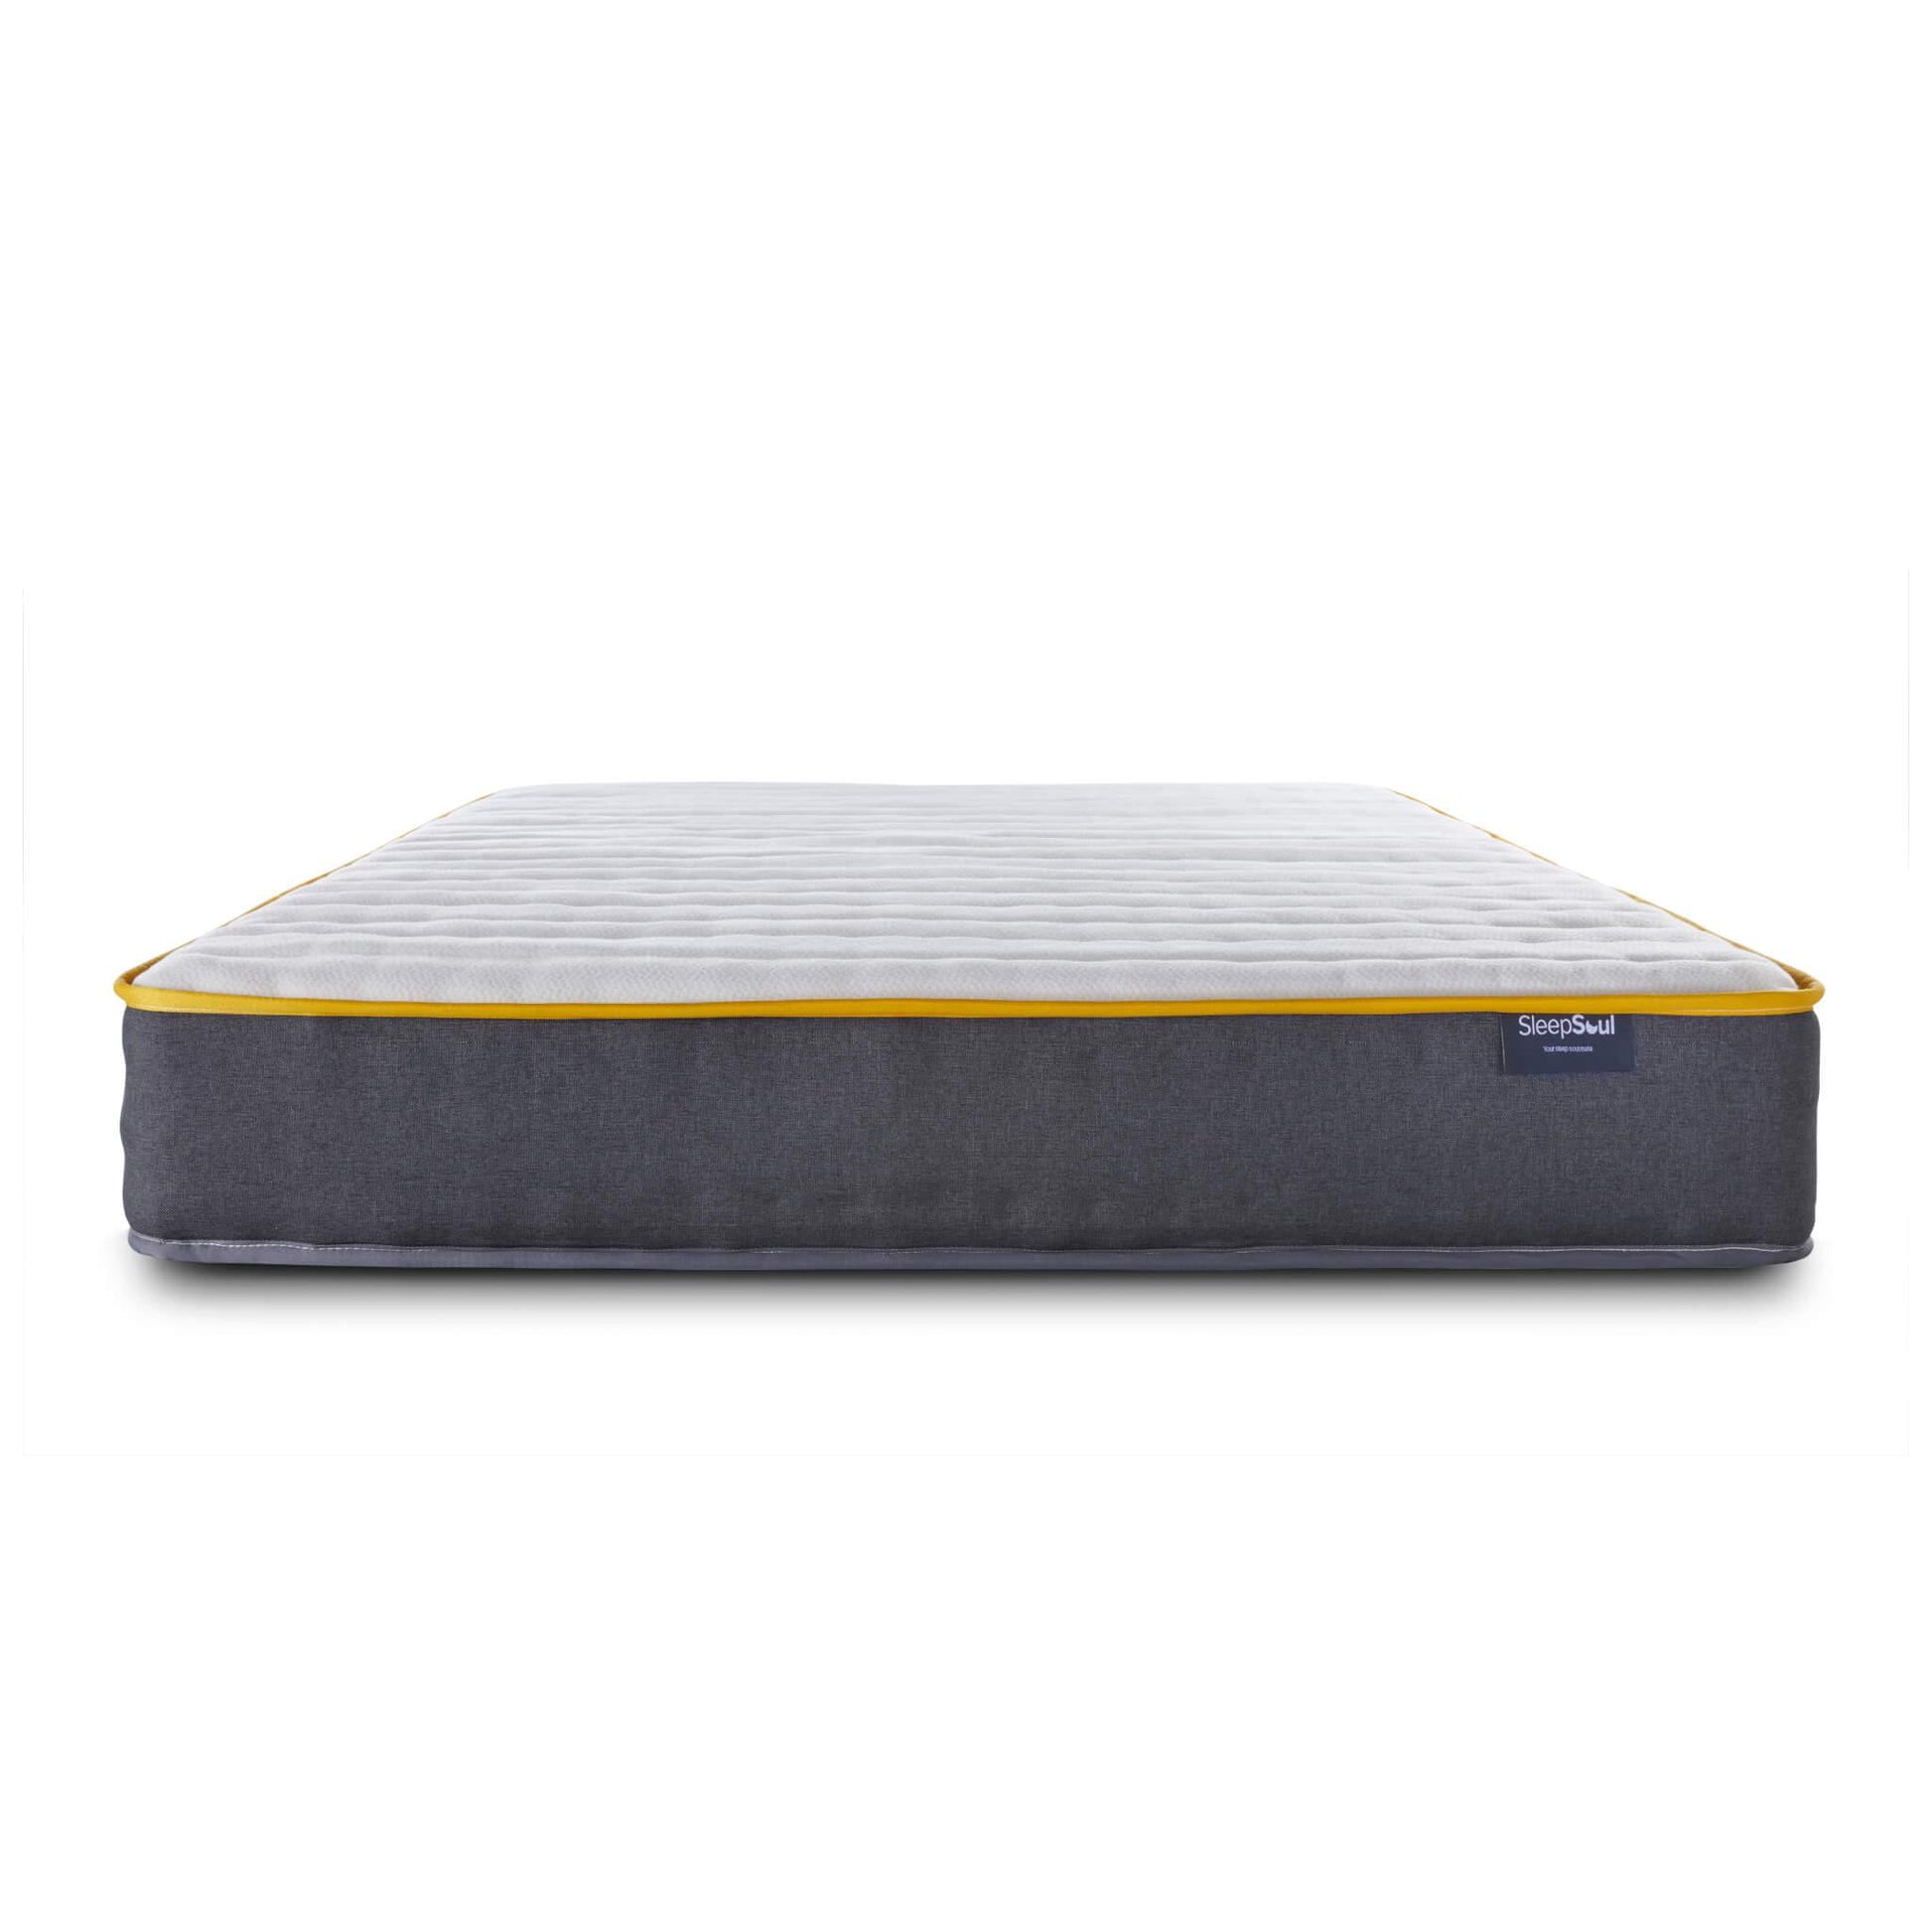 SleepSoul balance 800 pocket spring and memory foam small double mattress side